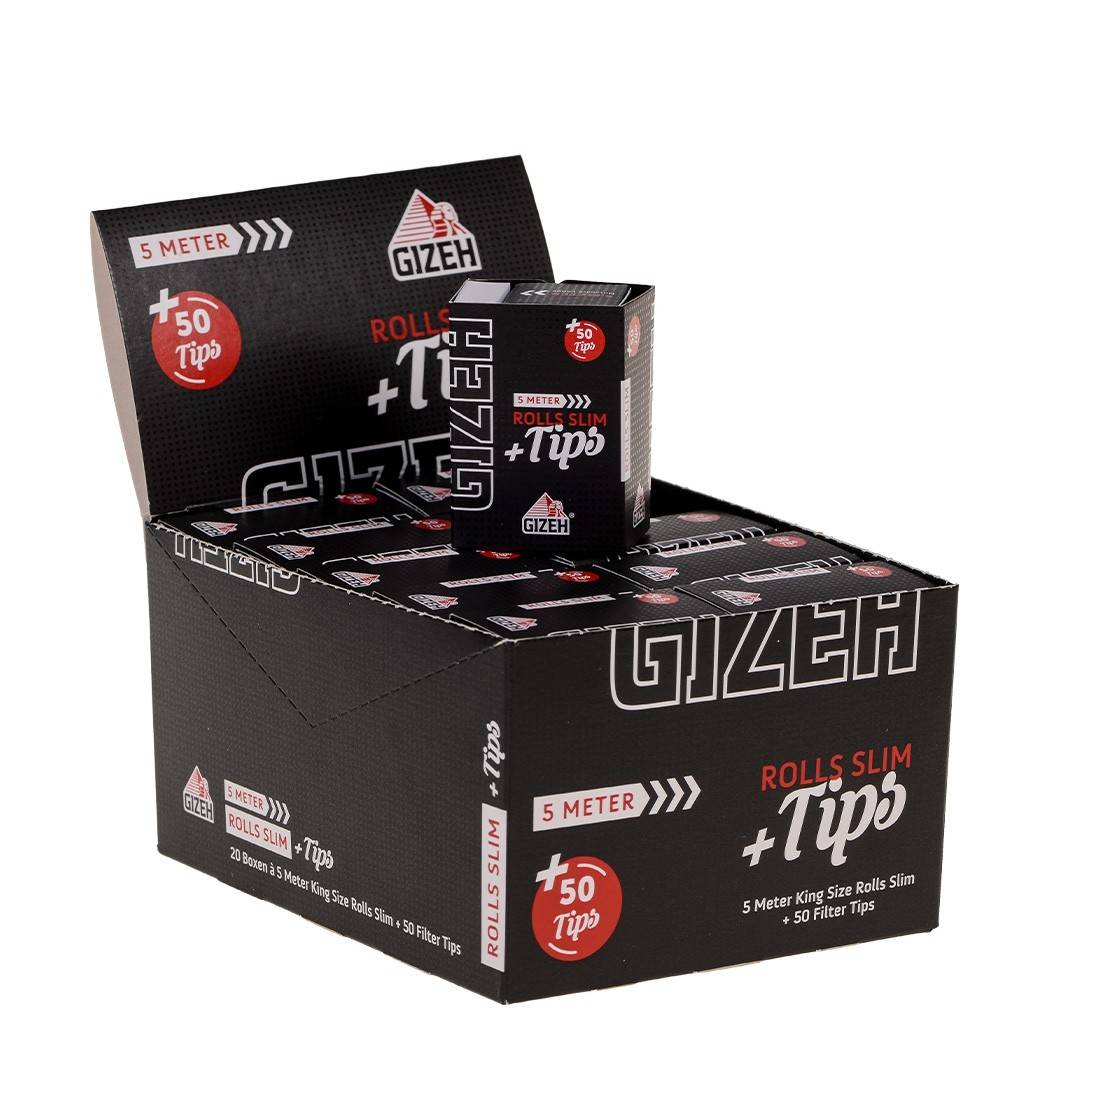 GIZEH Black Rolls + Tips, 5 meter roll + 50 tips 1 box (20 rolls